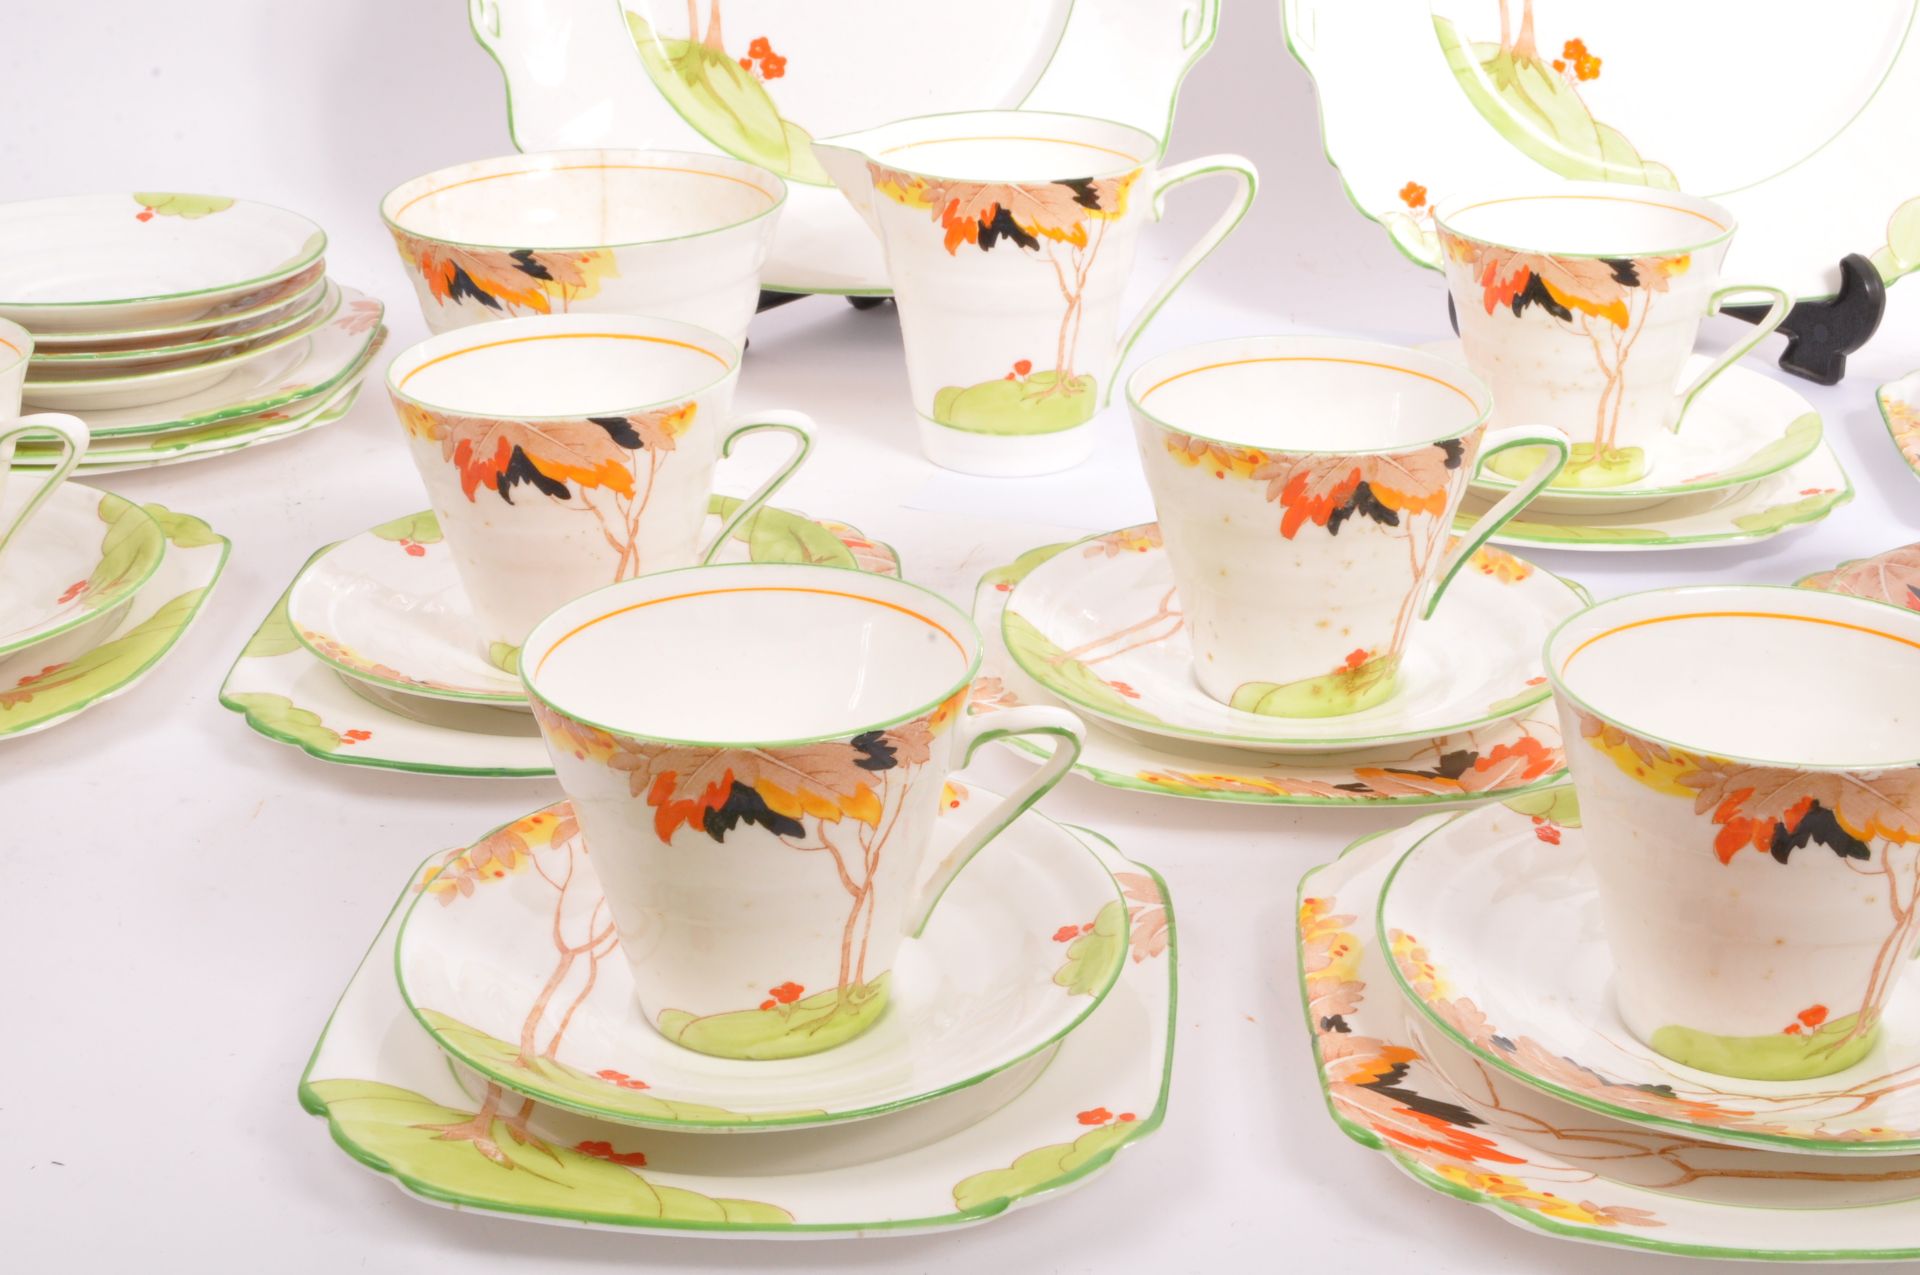 A VINTAGE RETRO TEA SERVICE SET BY VICTORIA BONE CHINA ENGLAND - Image 4 of 6